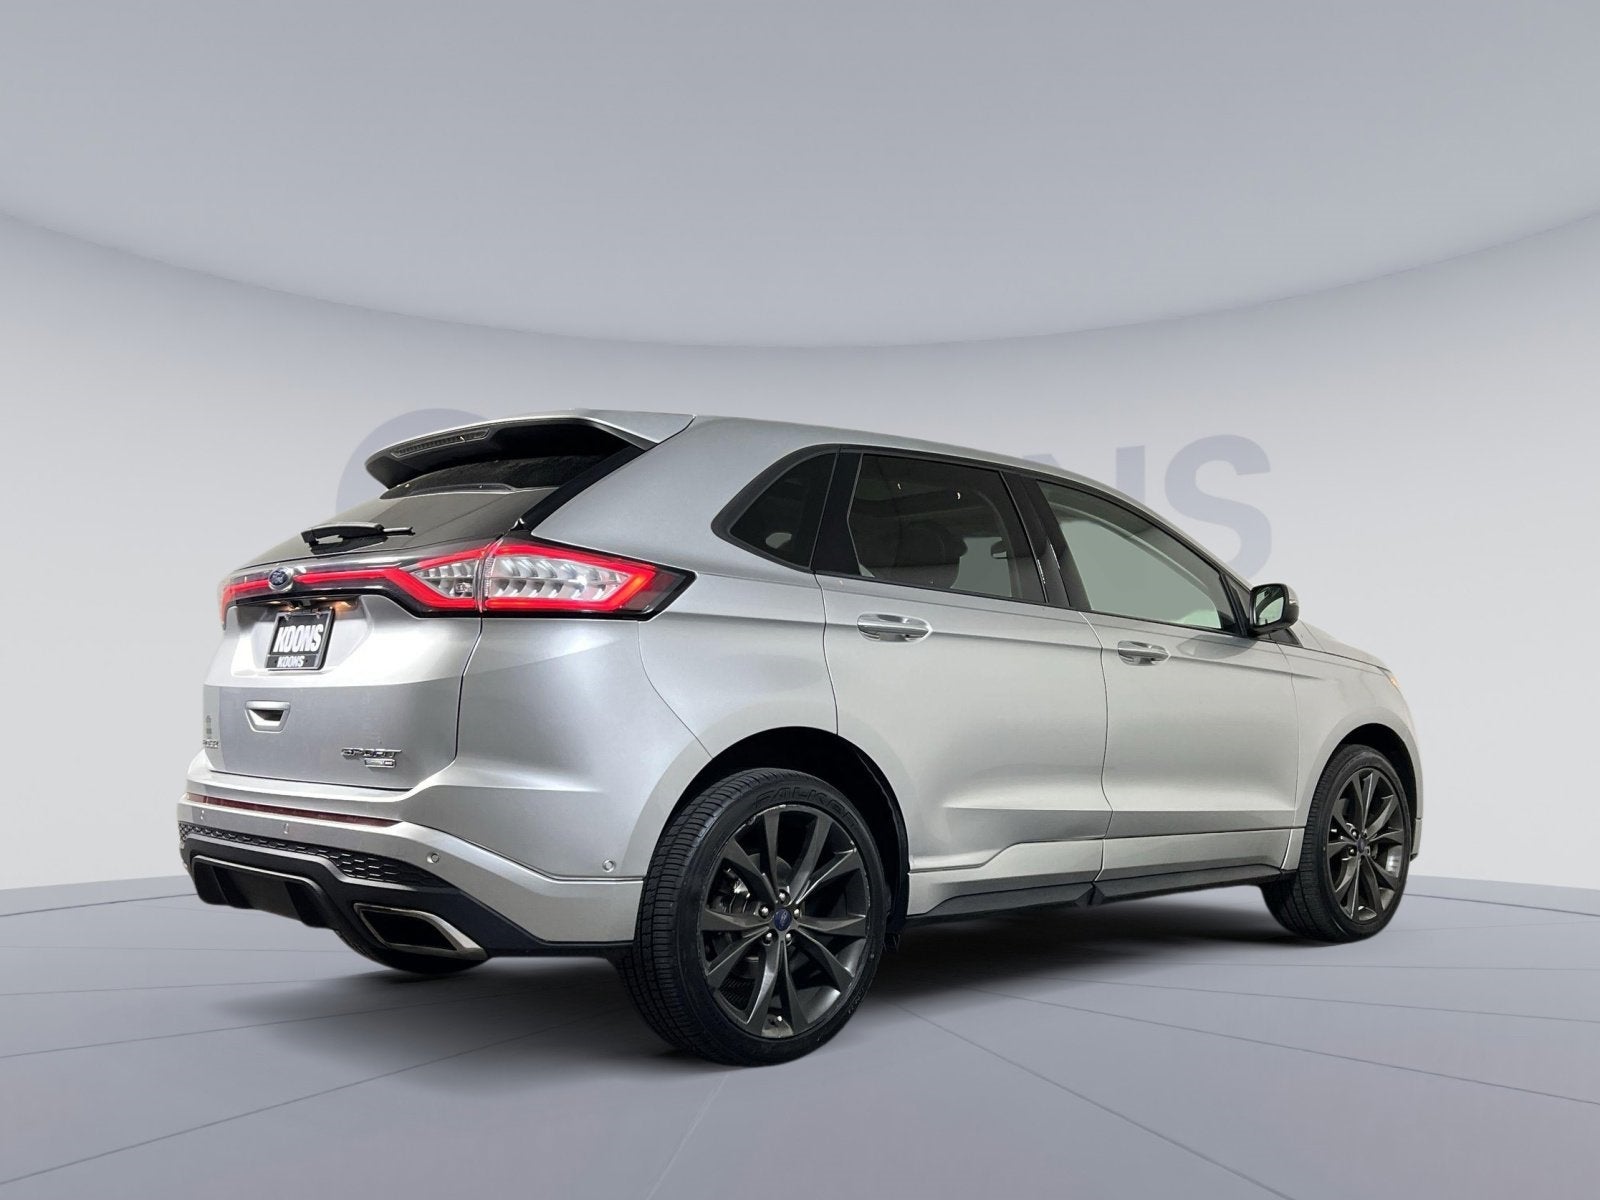 2015 Ford Edge Sport